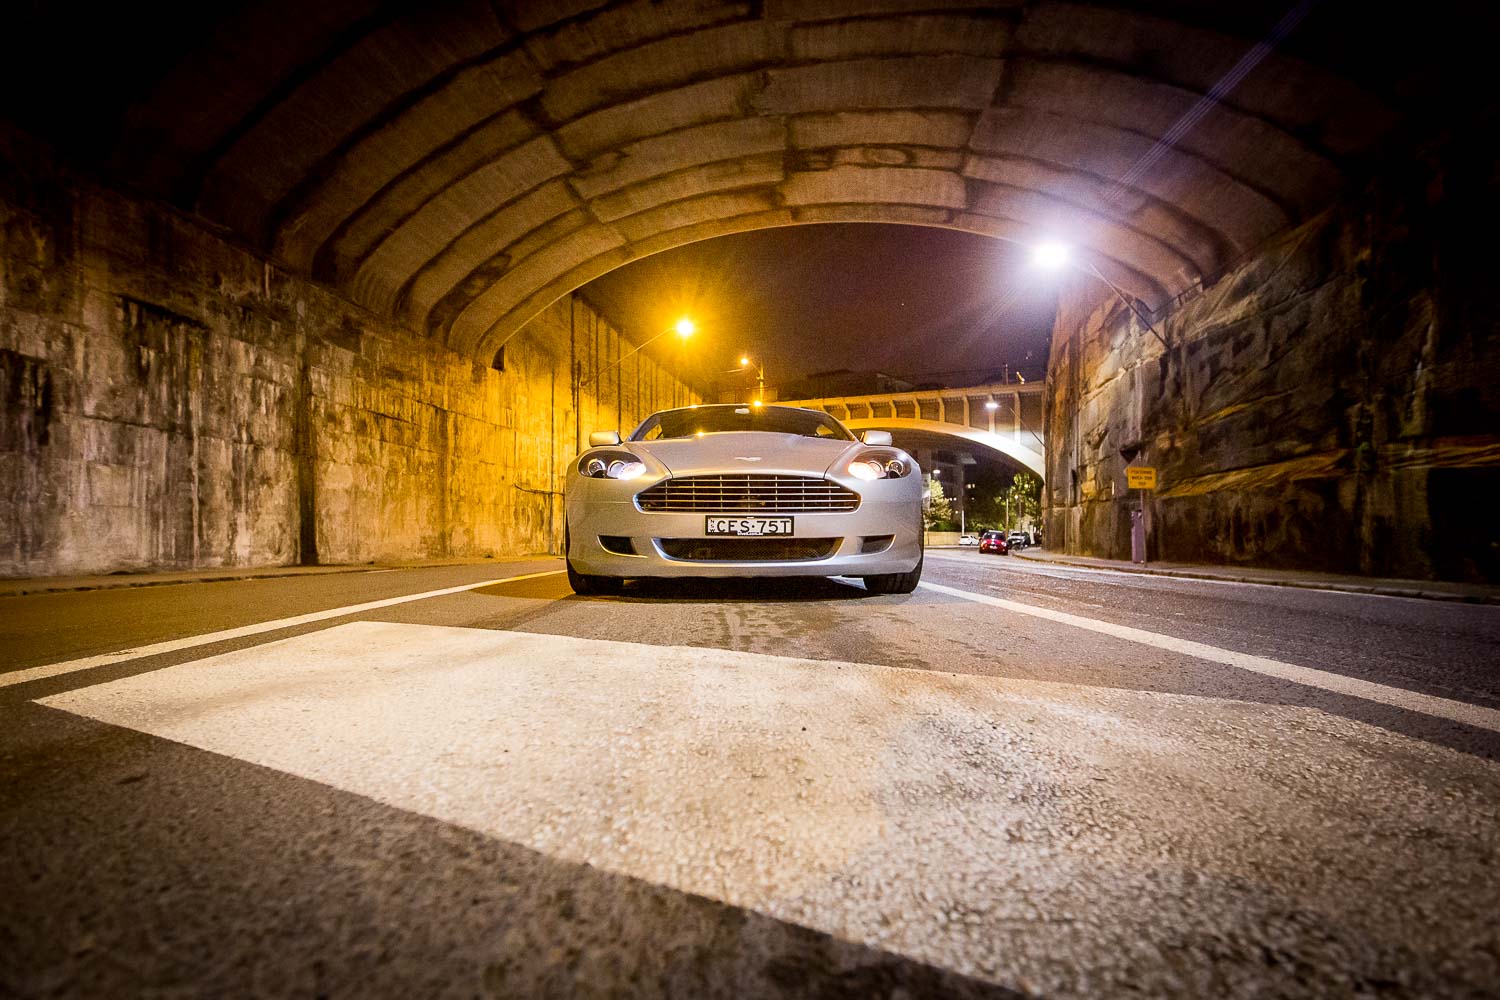 Aston Martin DB9 - London Performance Car Photography